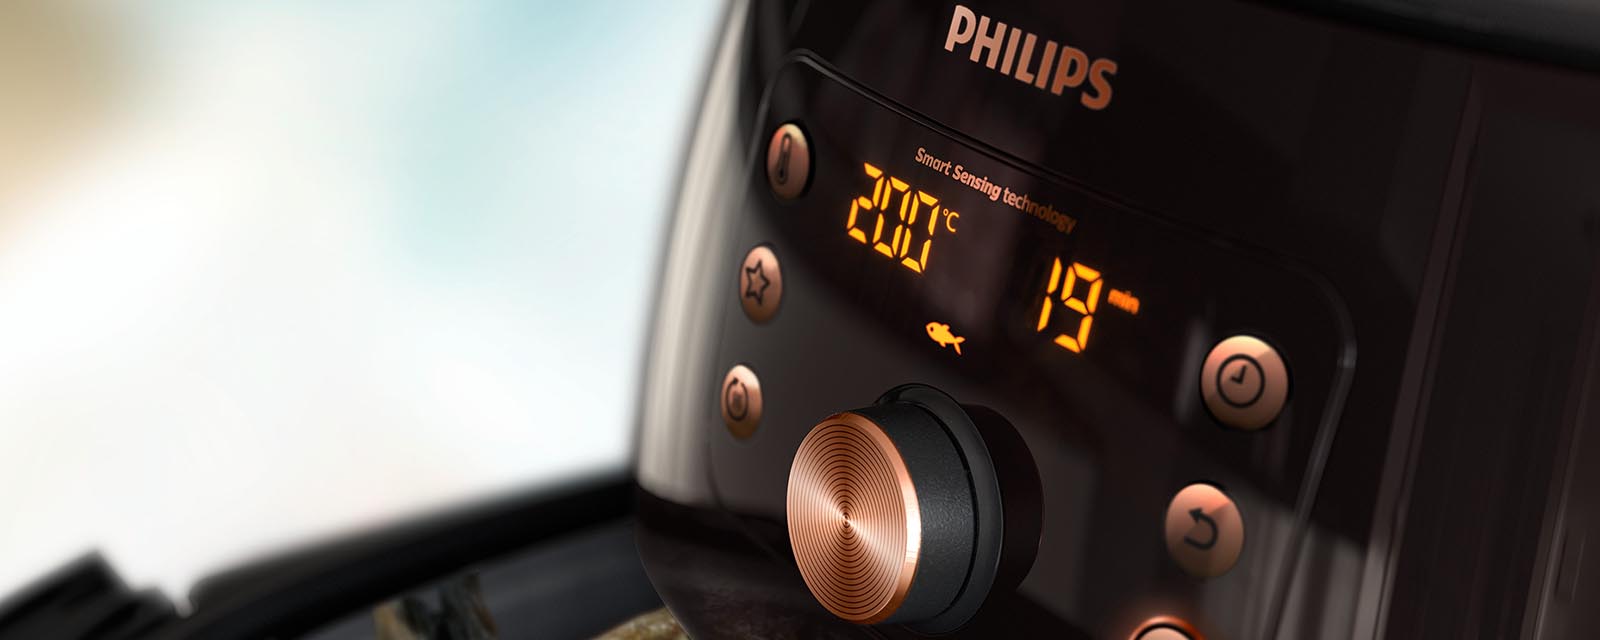 Air Fryer - Philips